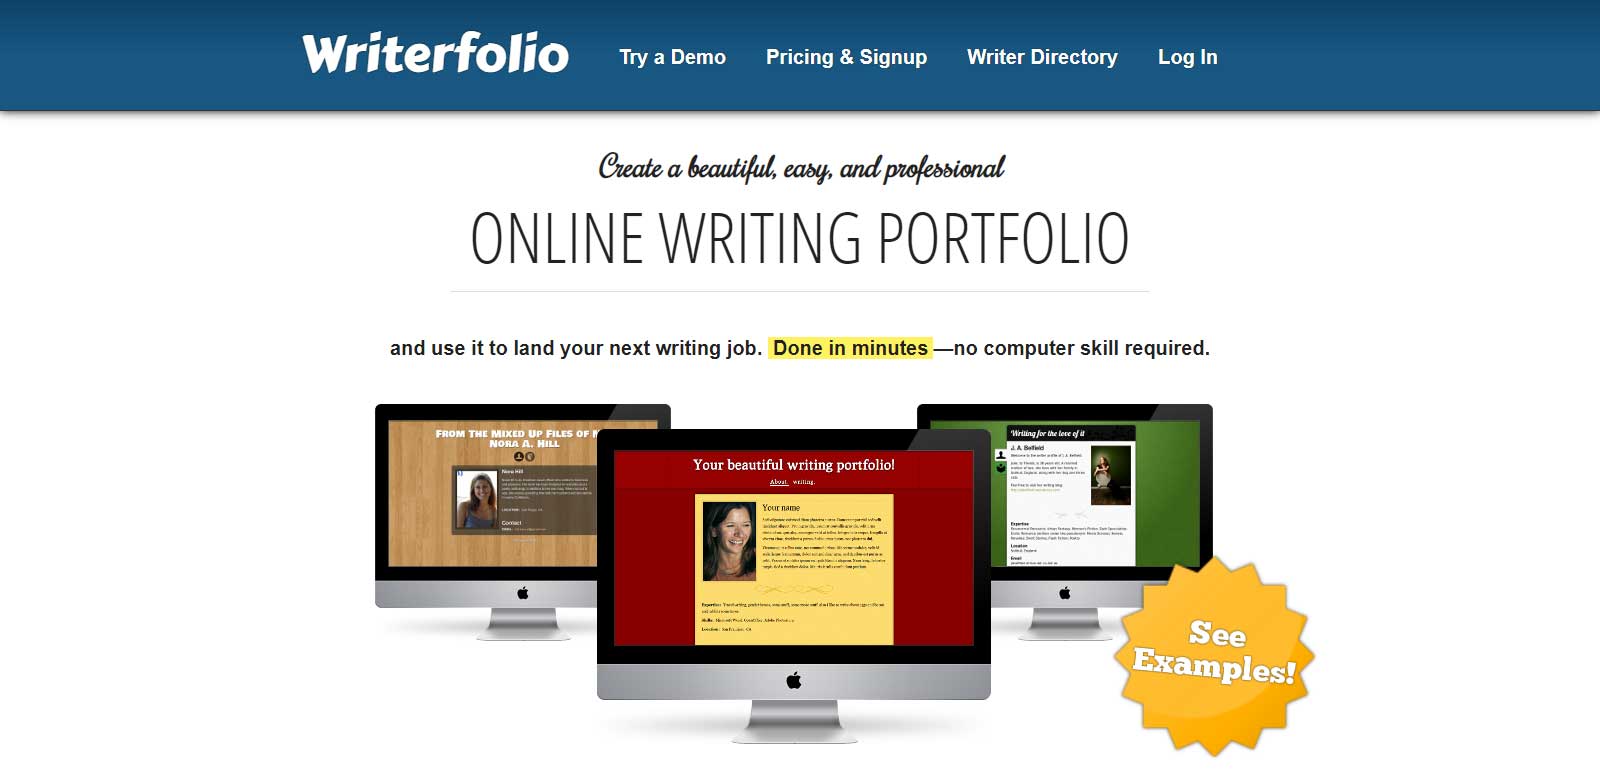 Easy, professional online writing portfolios